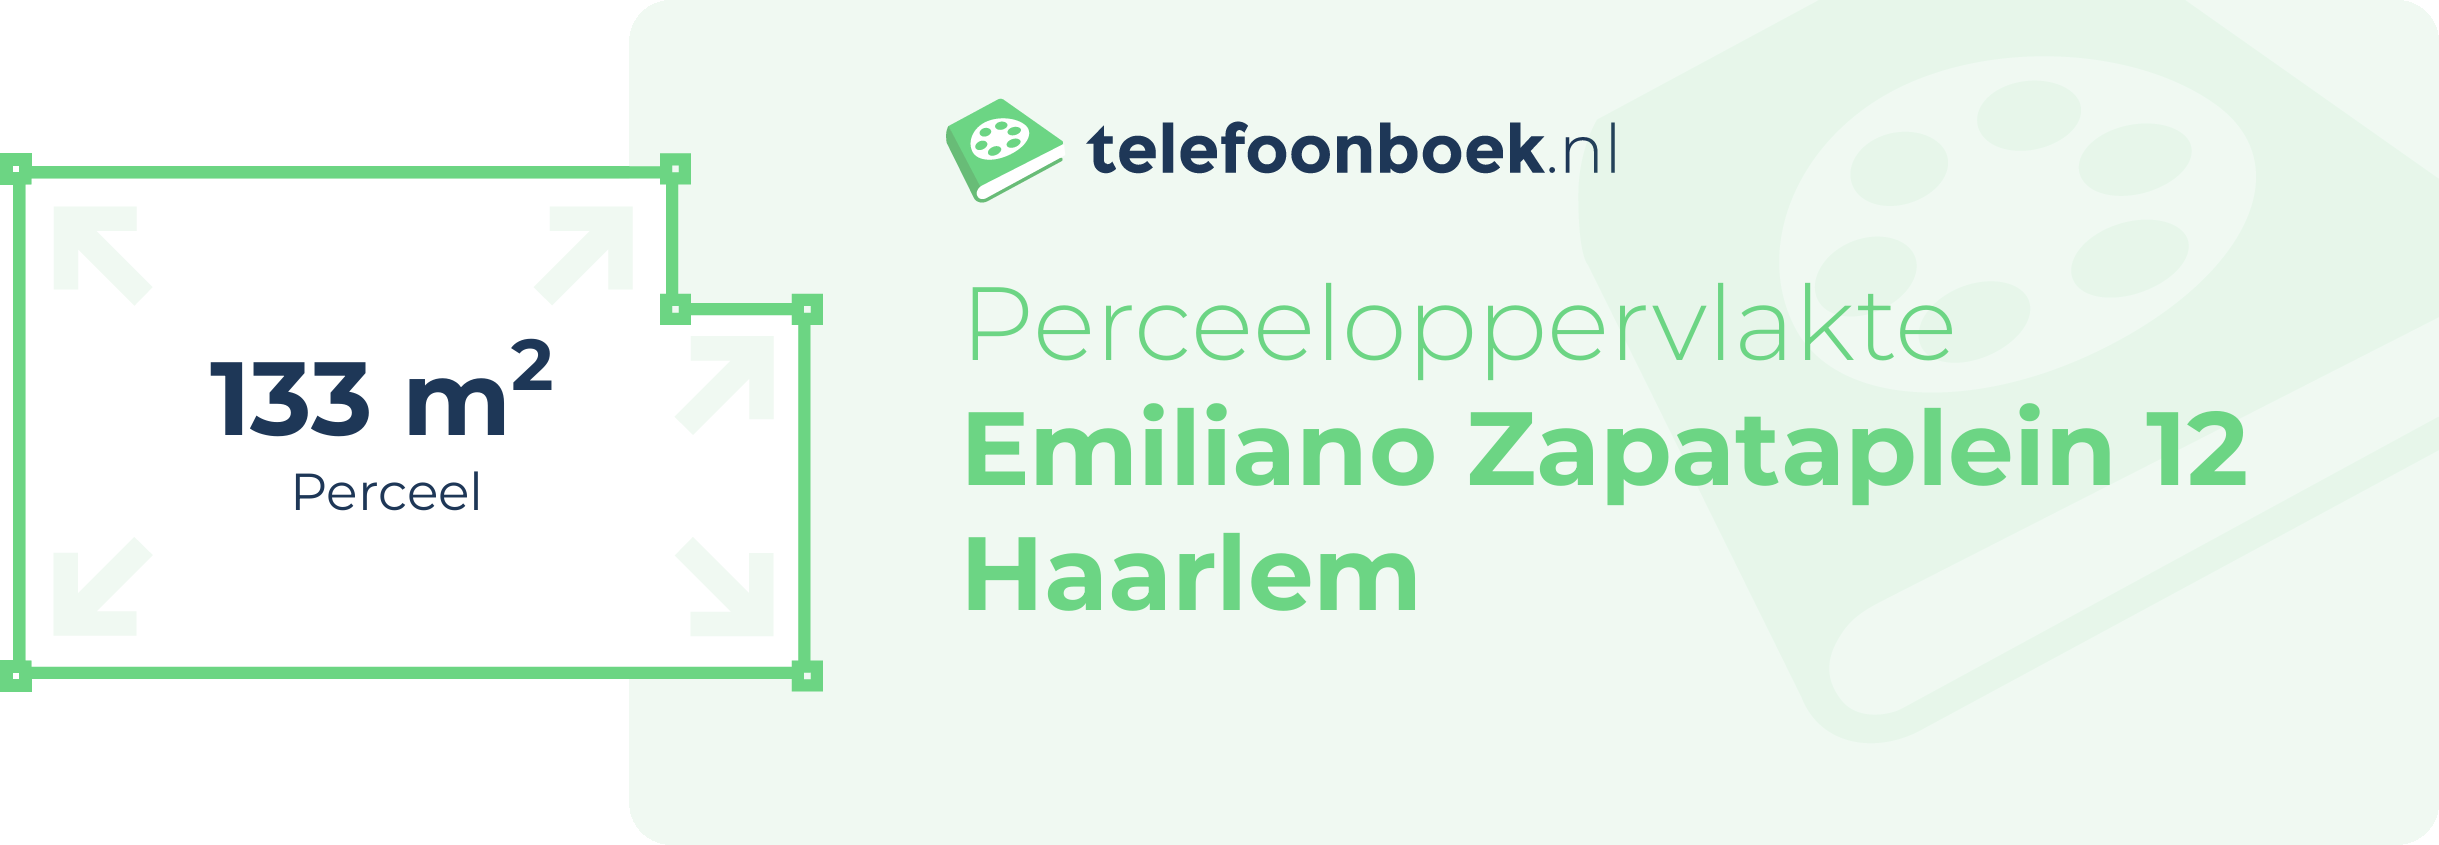 Perceeloppervlakte Emiliano Zapataplein 12 Haarlem